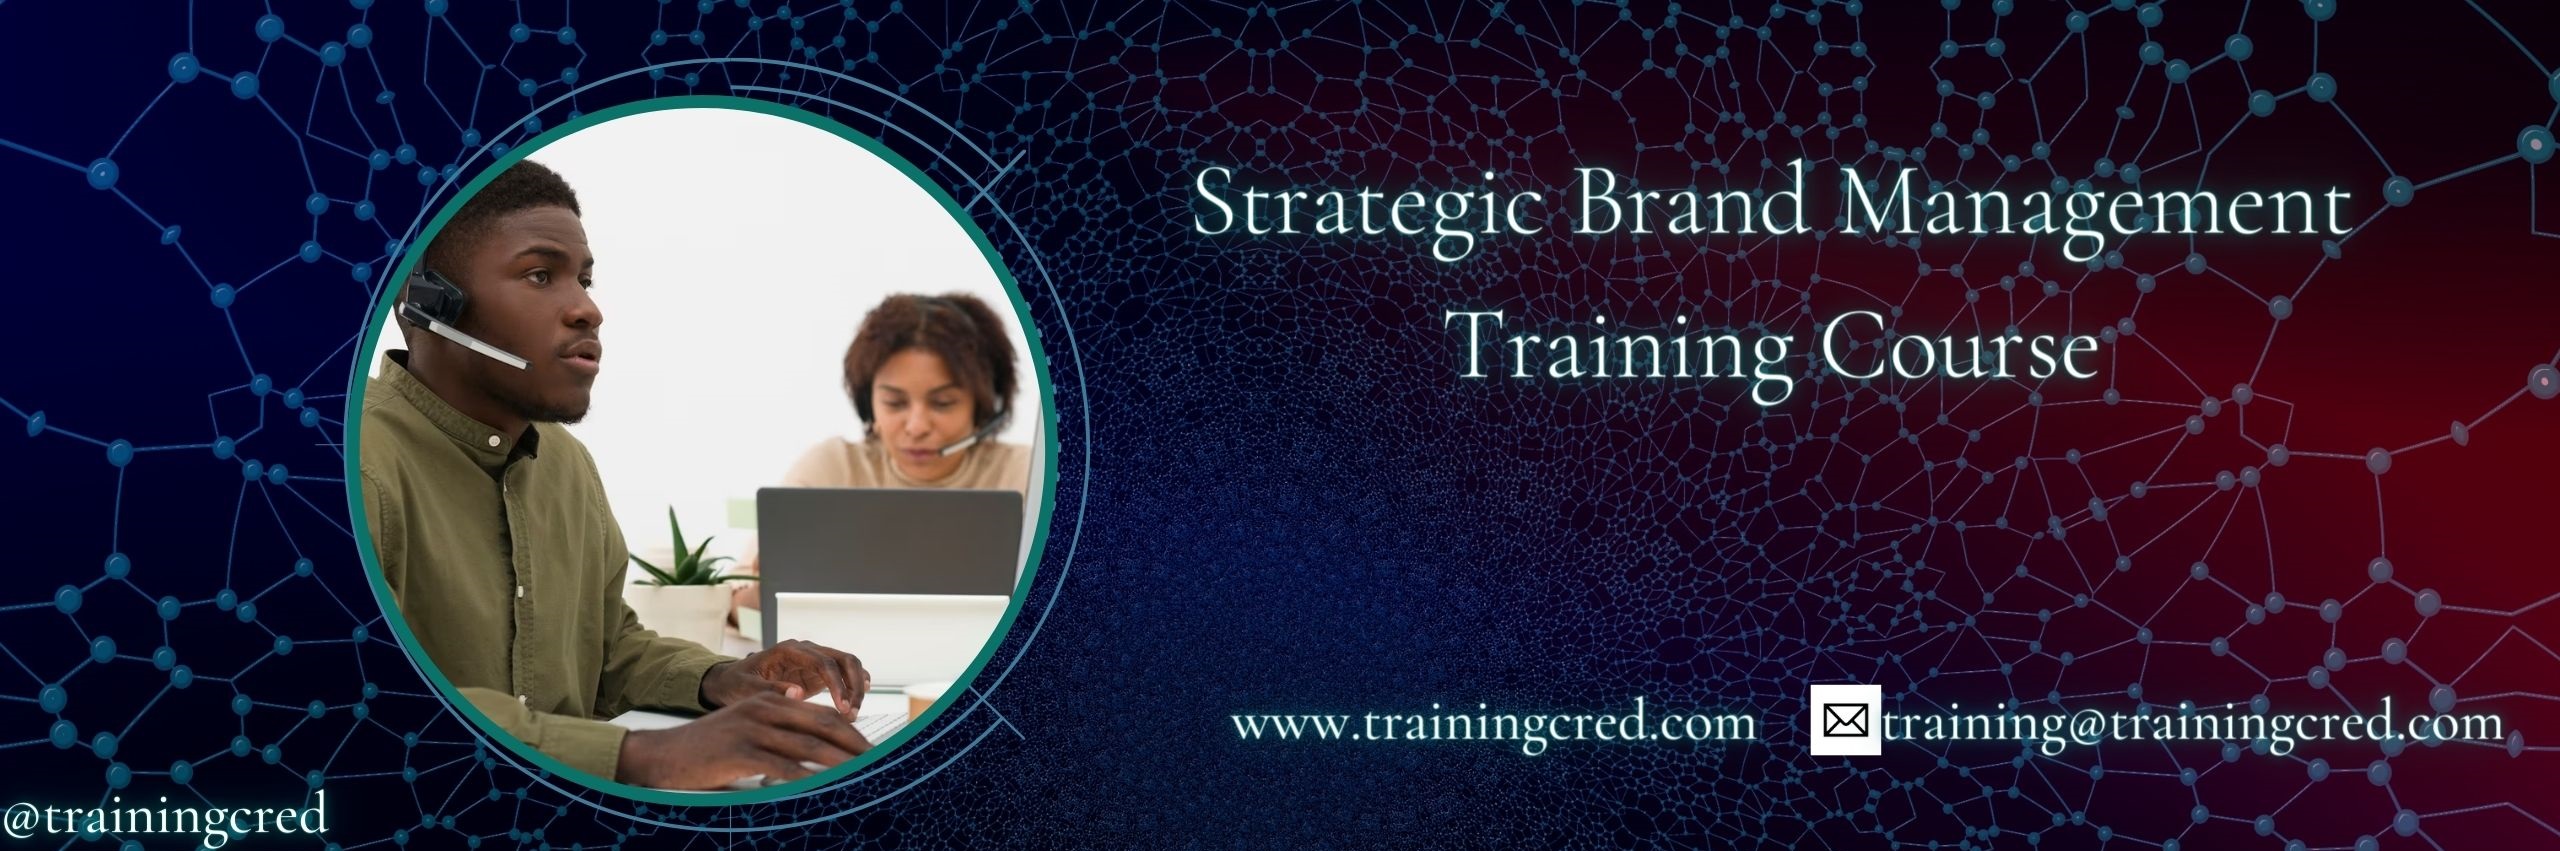 Strategic Brand Management Training